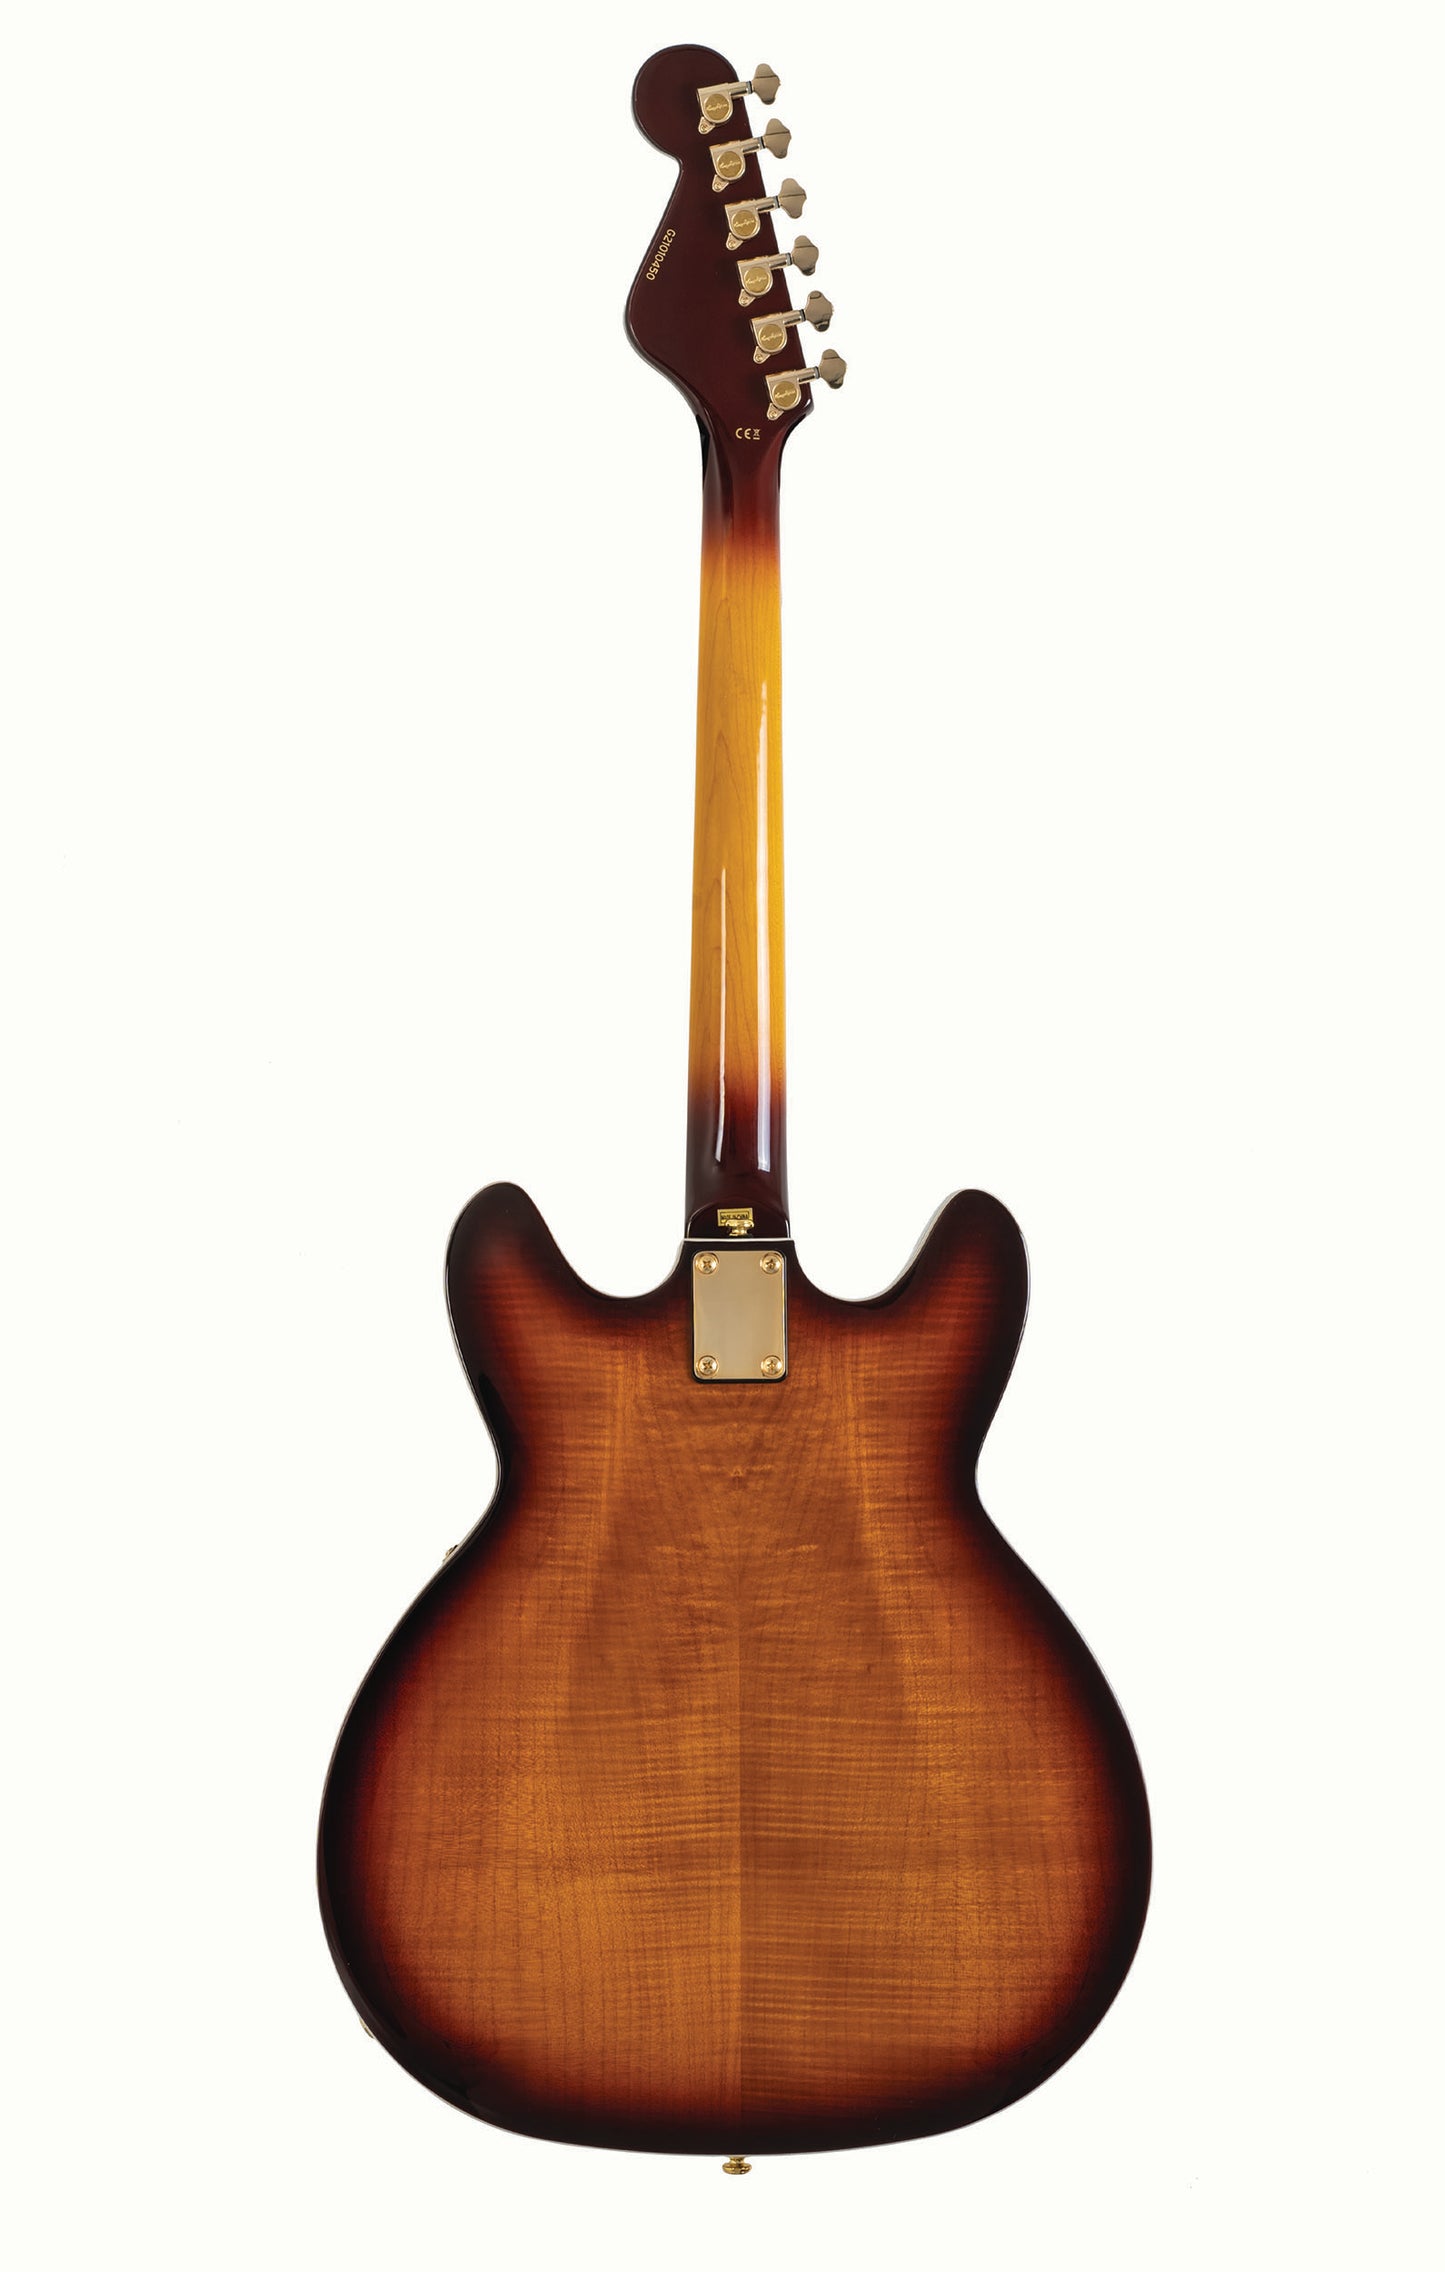 Hagstrom VIK67-G-VSB '67 Viking II Electric Guitar. Vintage Sunburst